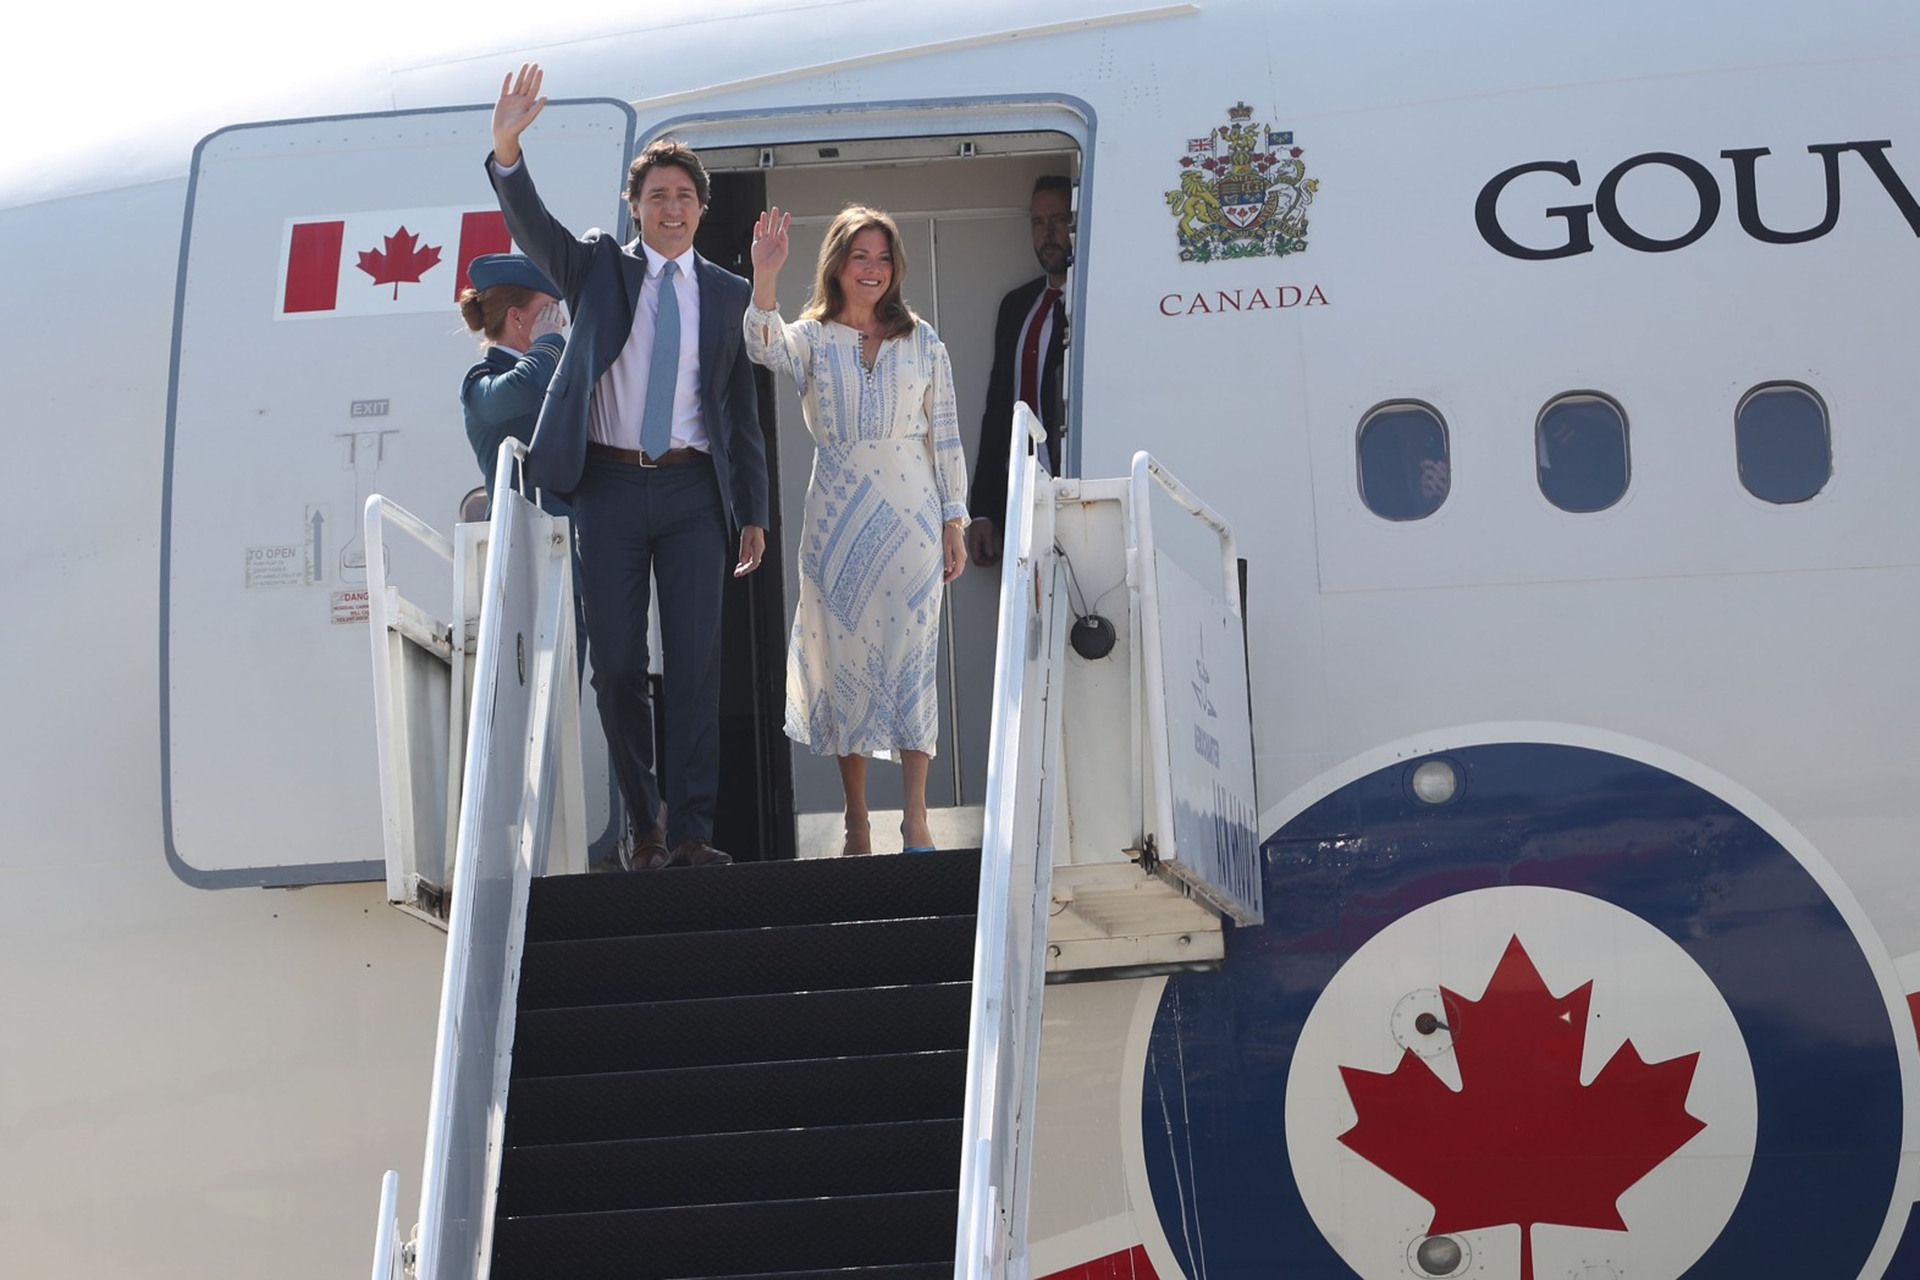 El primer ministro de Canadá, Justin Trudeau, llegó este lunes a México para participar en la Cumbre de Líderes de Norteamérica. (EL UNIVERSAL)